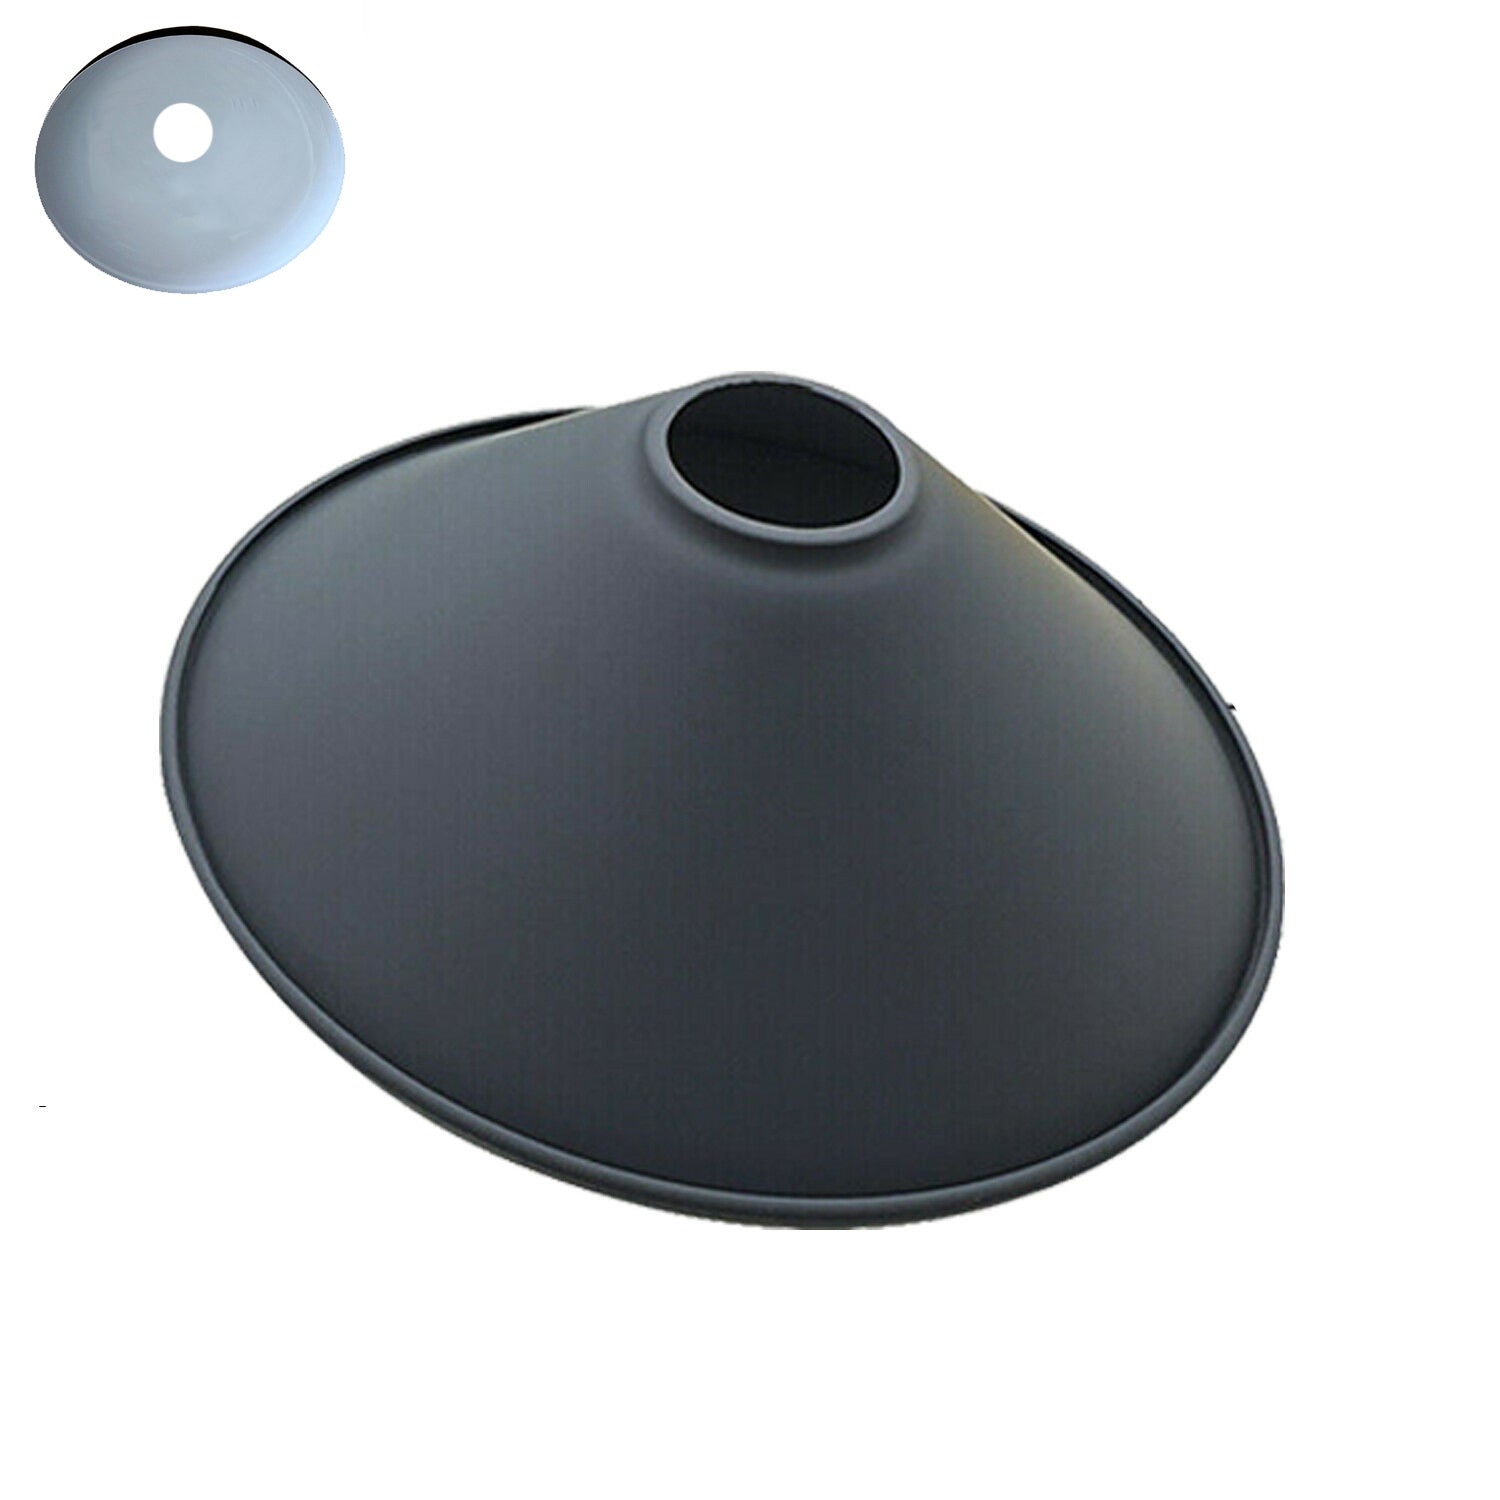 Modern Ceiling Pendant Light Shades Grey Colour Lamp Shades Easy Fit~1109 - LEDSone UK Ltd